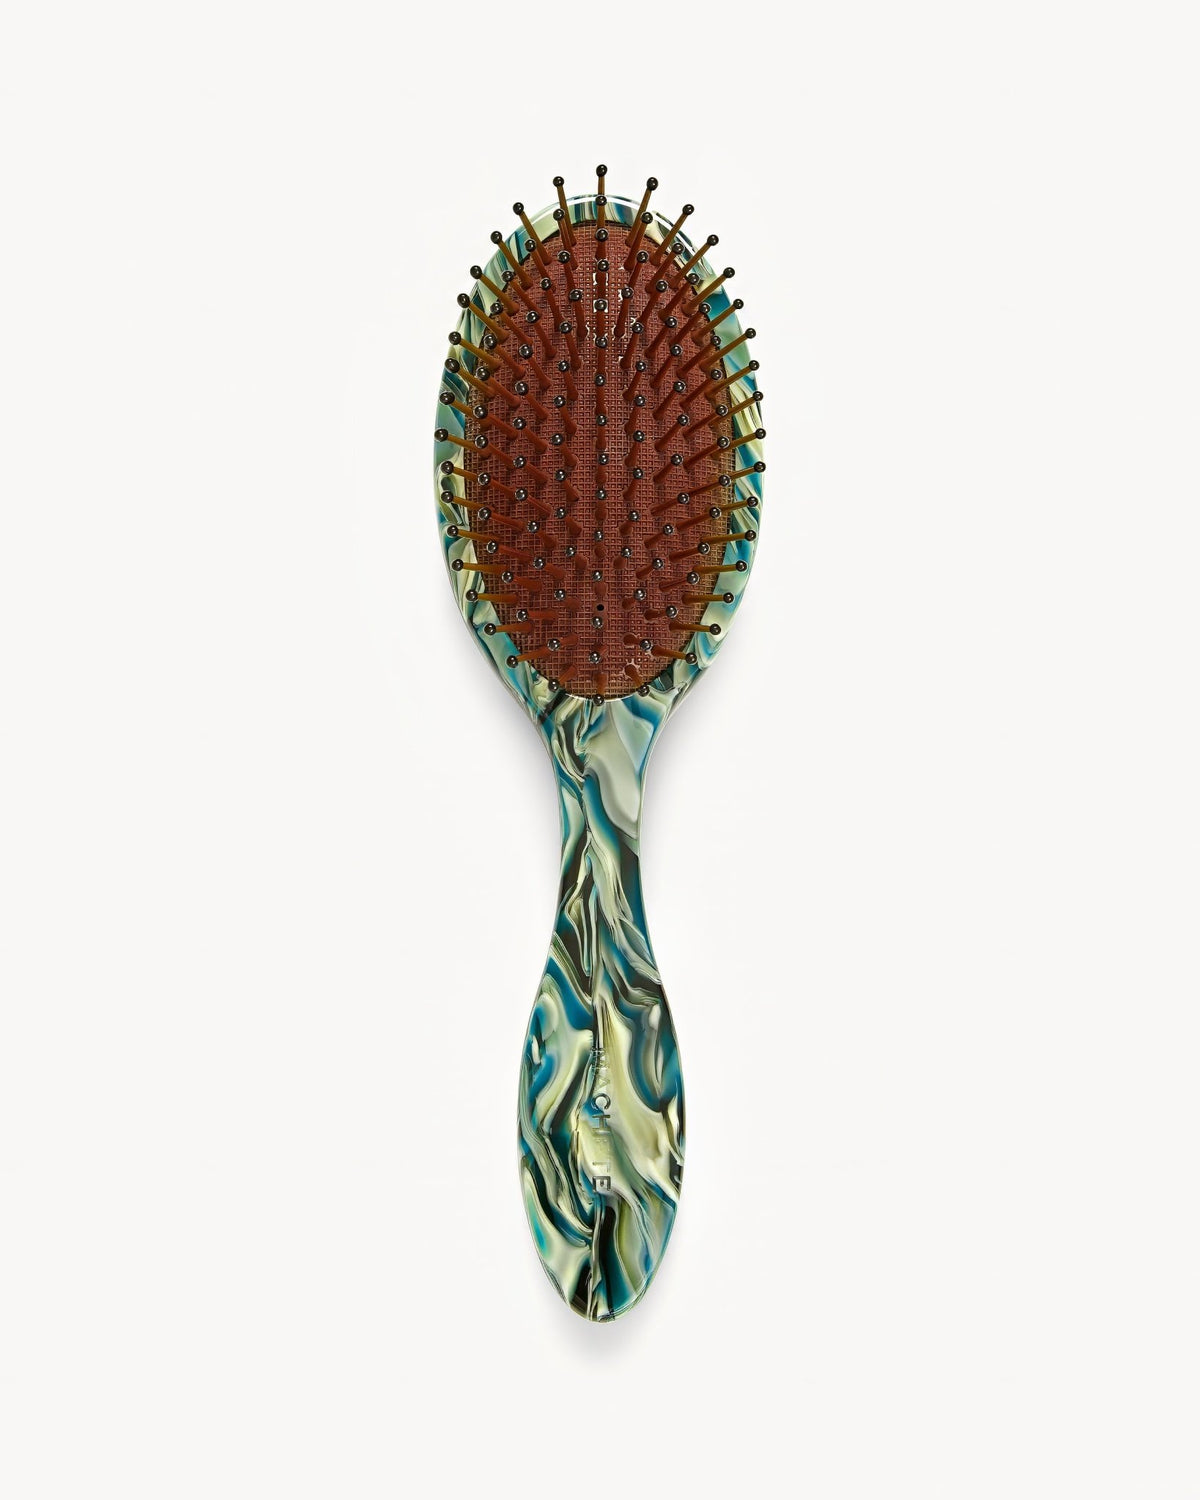 MACHETE Everyday Detangling Hair Brush in Stromanthe